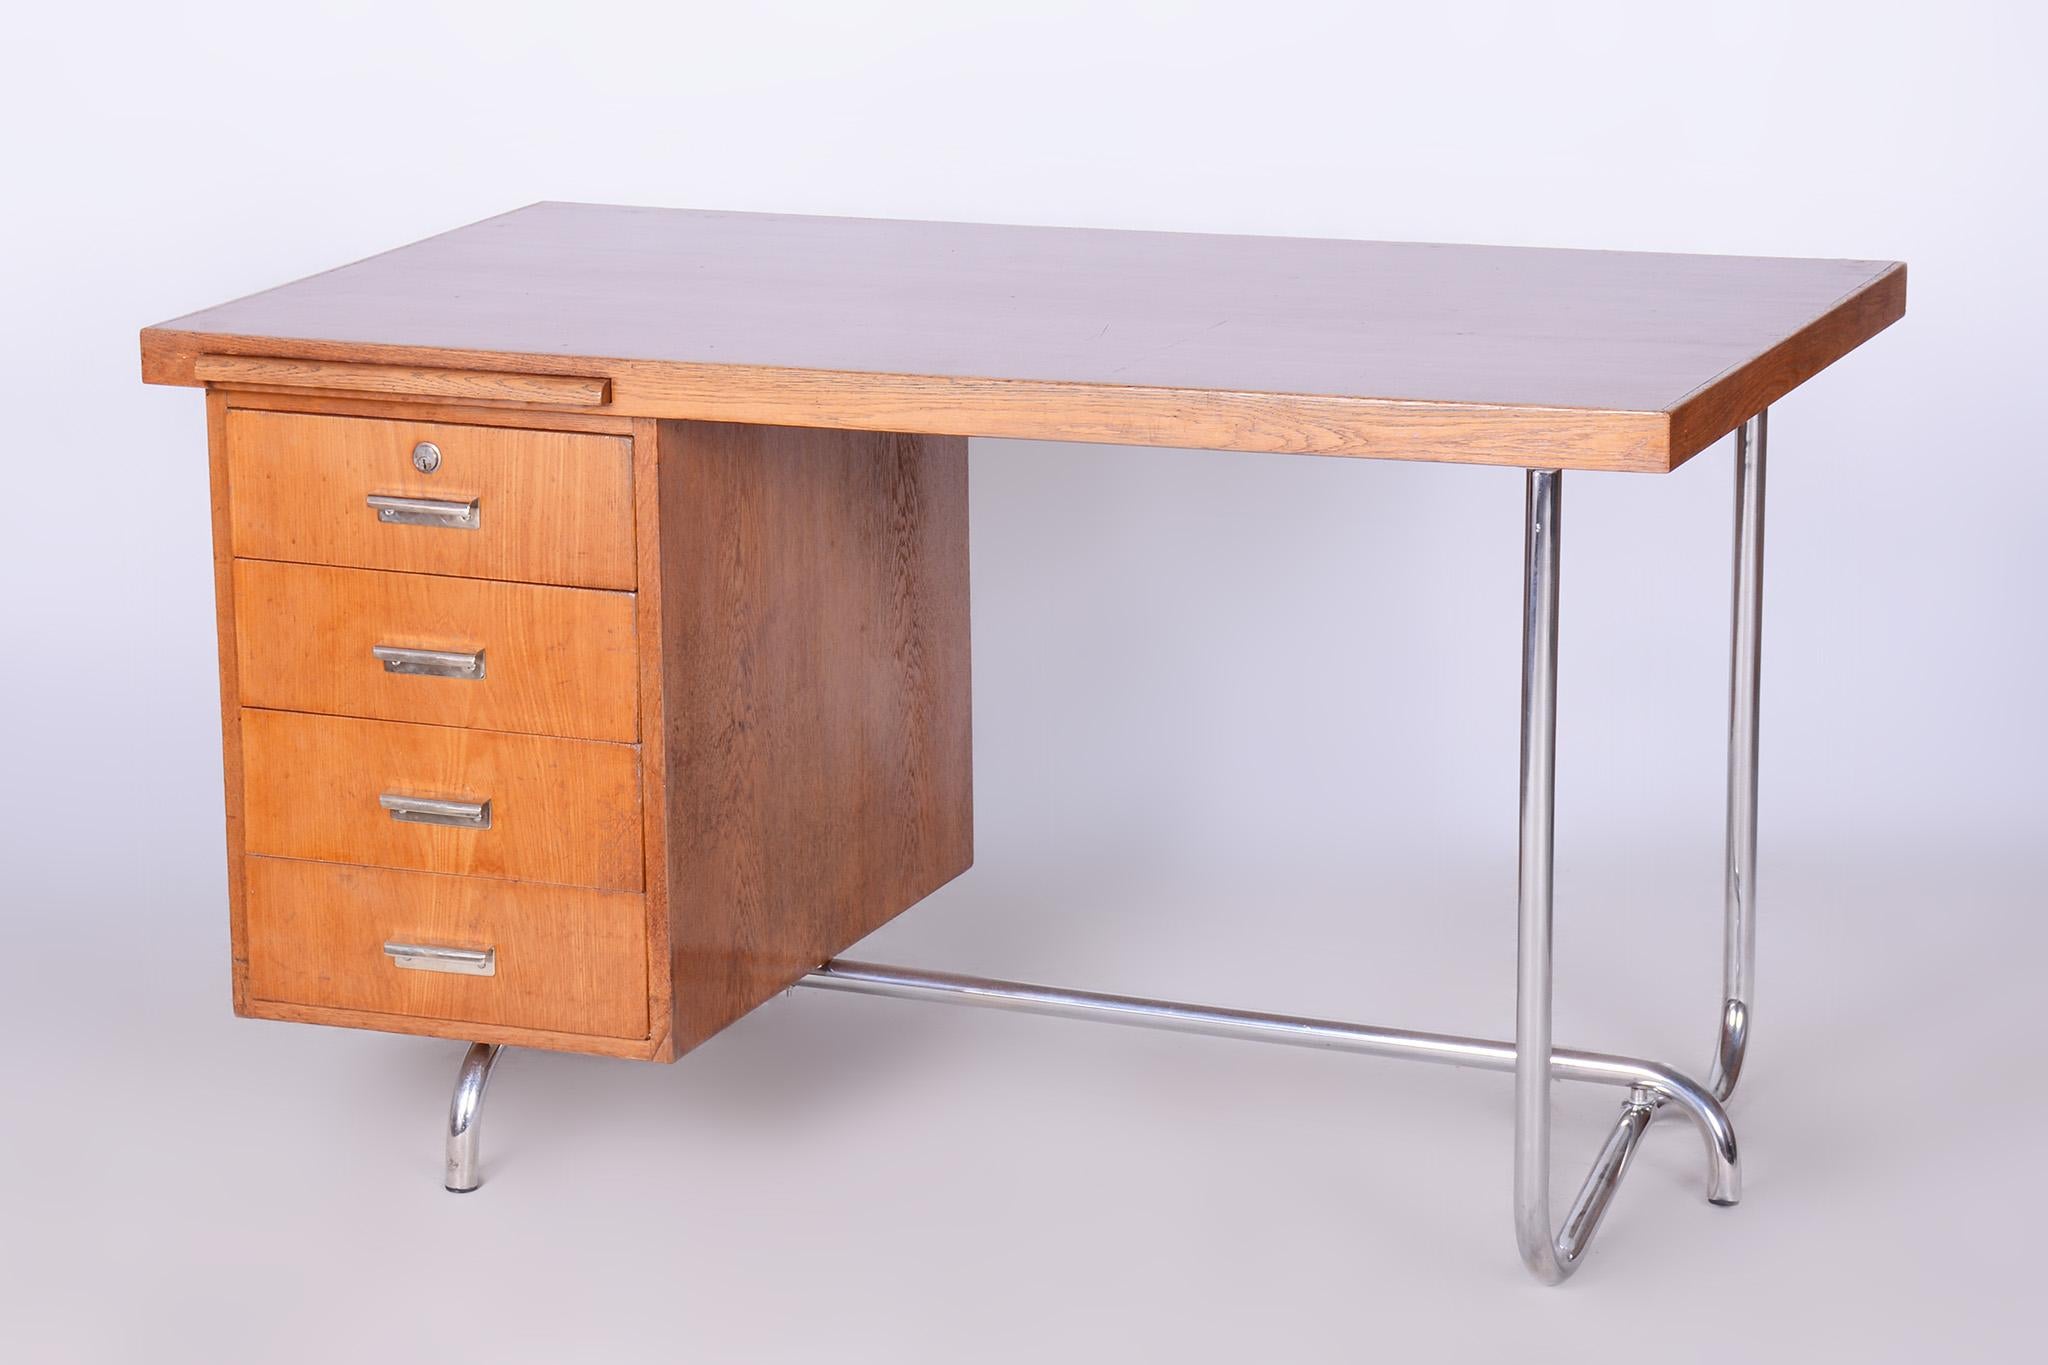 Restored Pair of Oak Writing Desks, Hynek Gottwald, Chrome, Czechia, 1930s In Good Condition For Sale In Horomerice, CZ